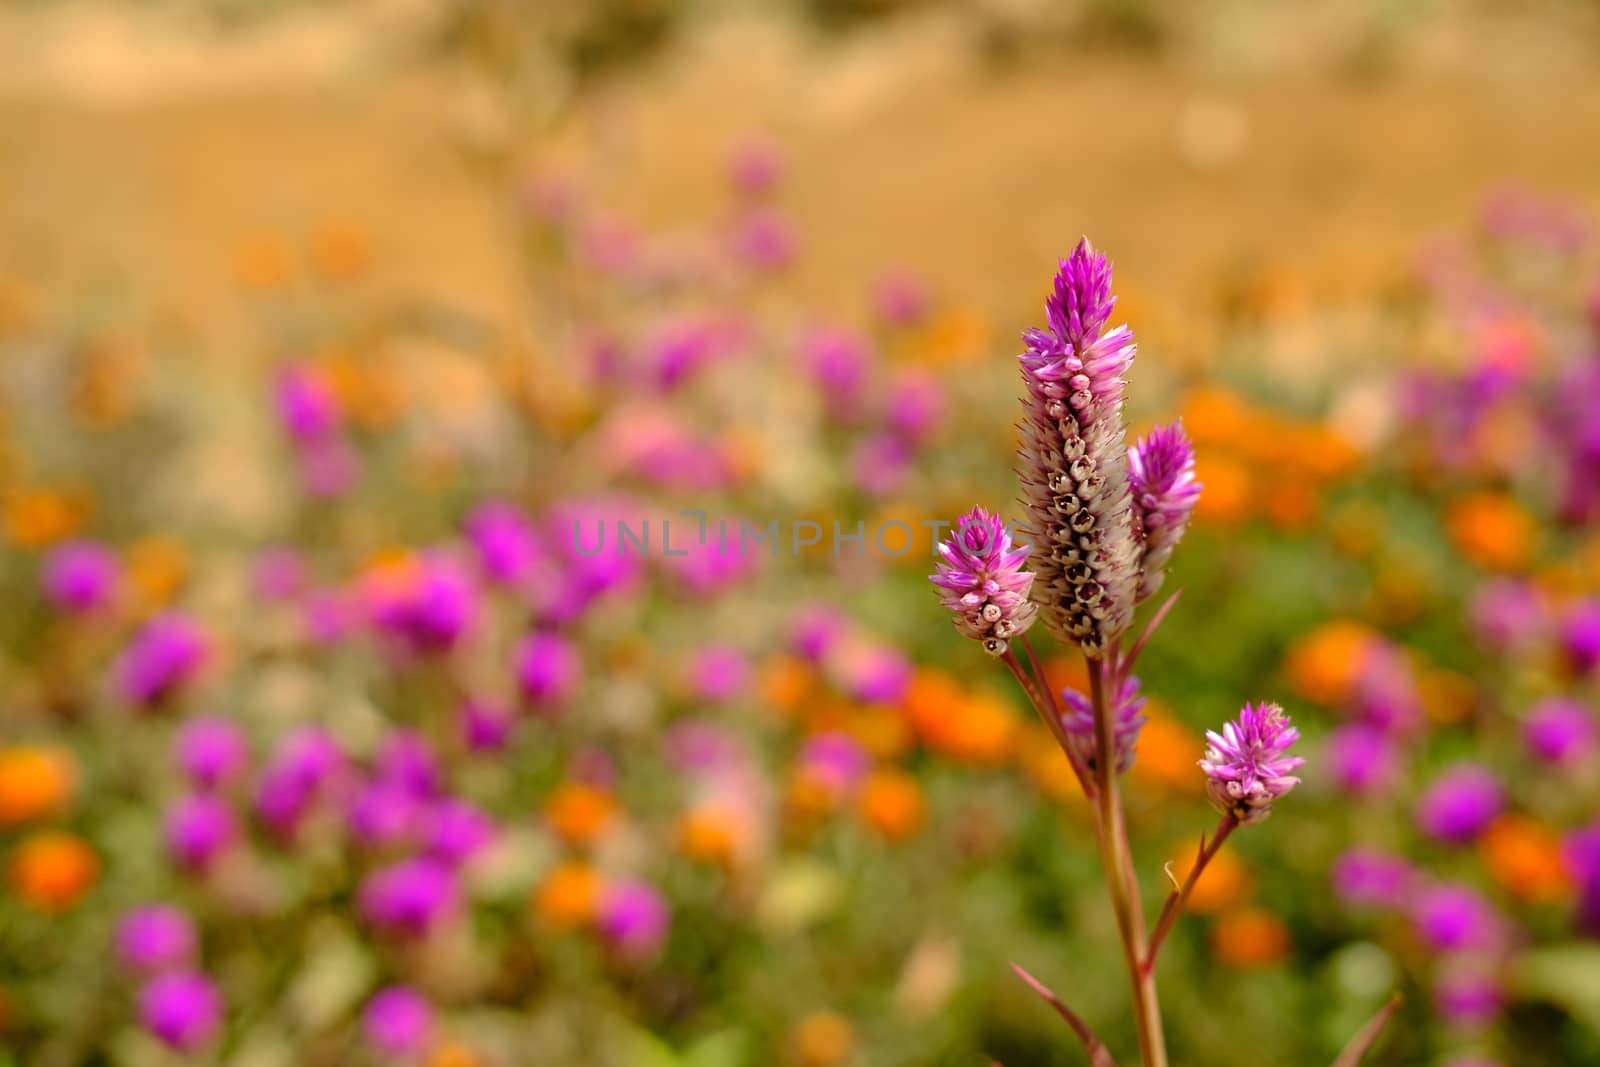 celosia argentea L. flower with dreamy background. Image photo